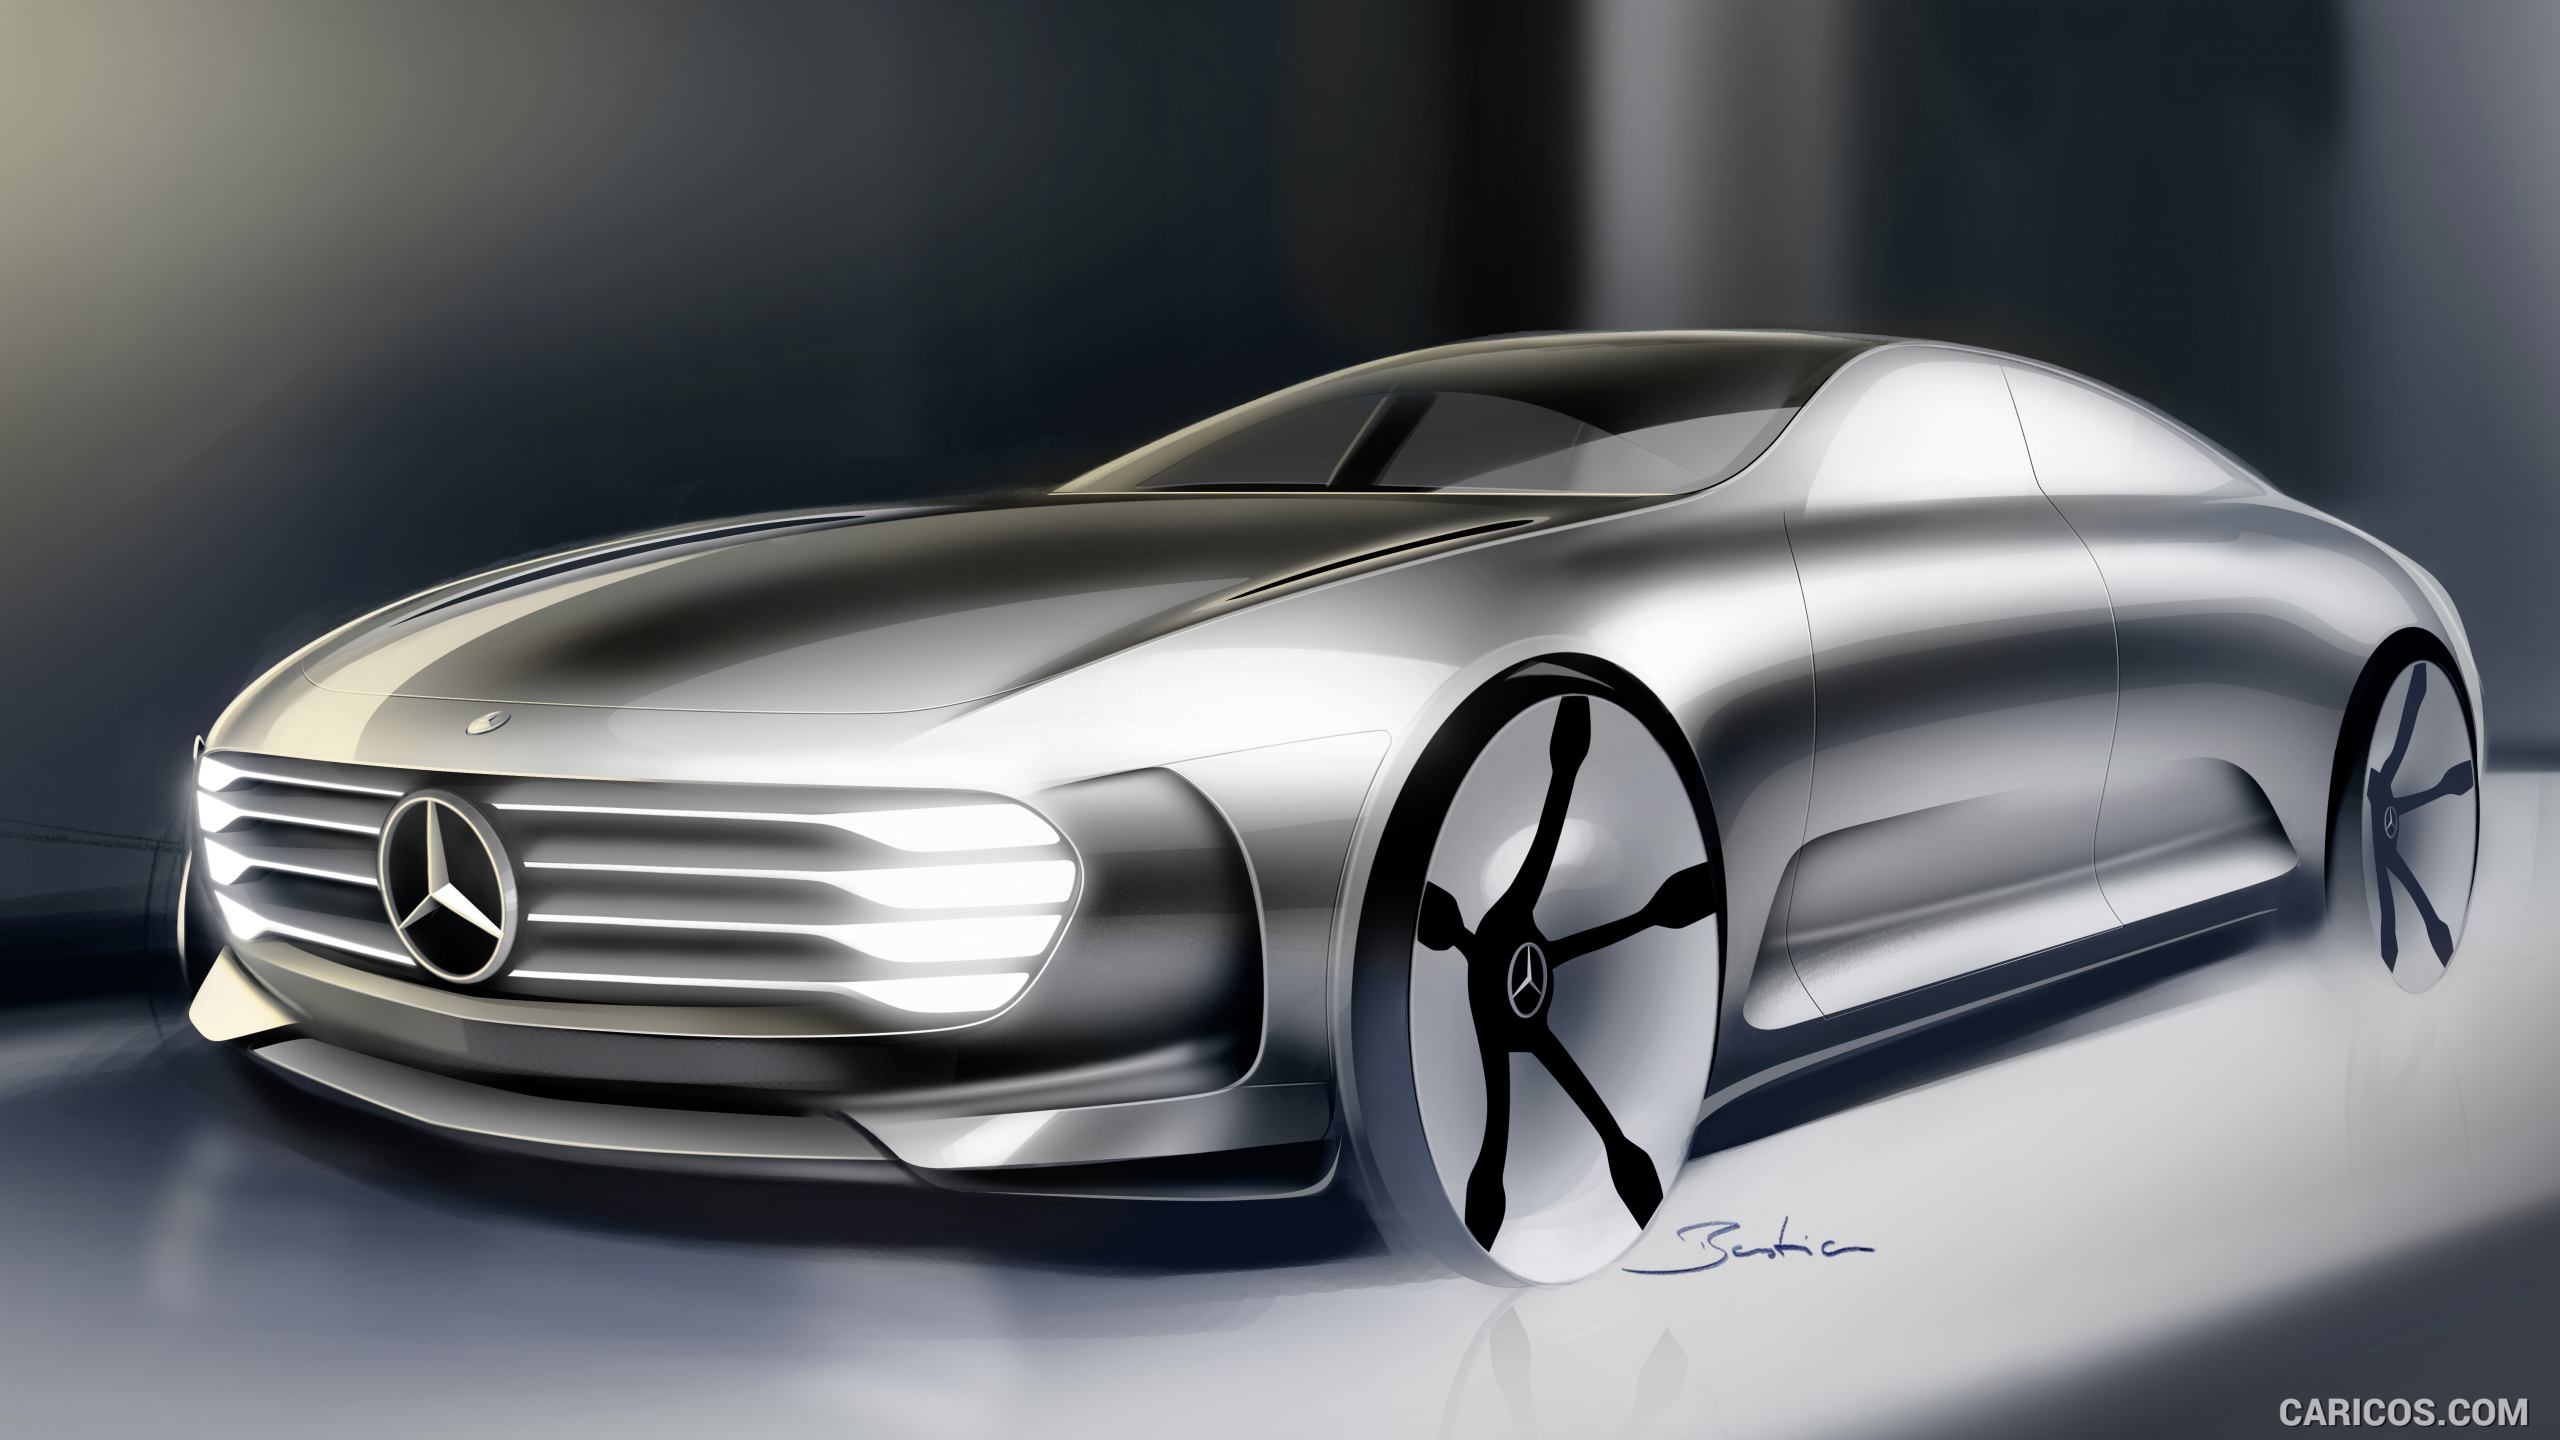 2015 Mercedes-Benz Concept IAA (Intelligent Aerodynamic Automobile) - Design Sketch, #48 of 49